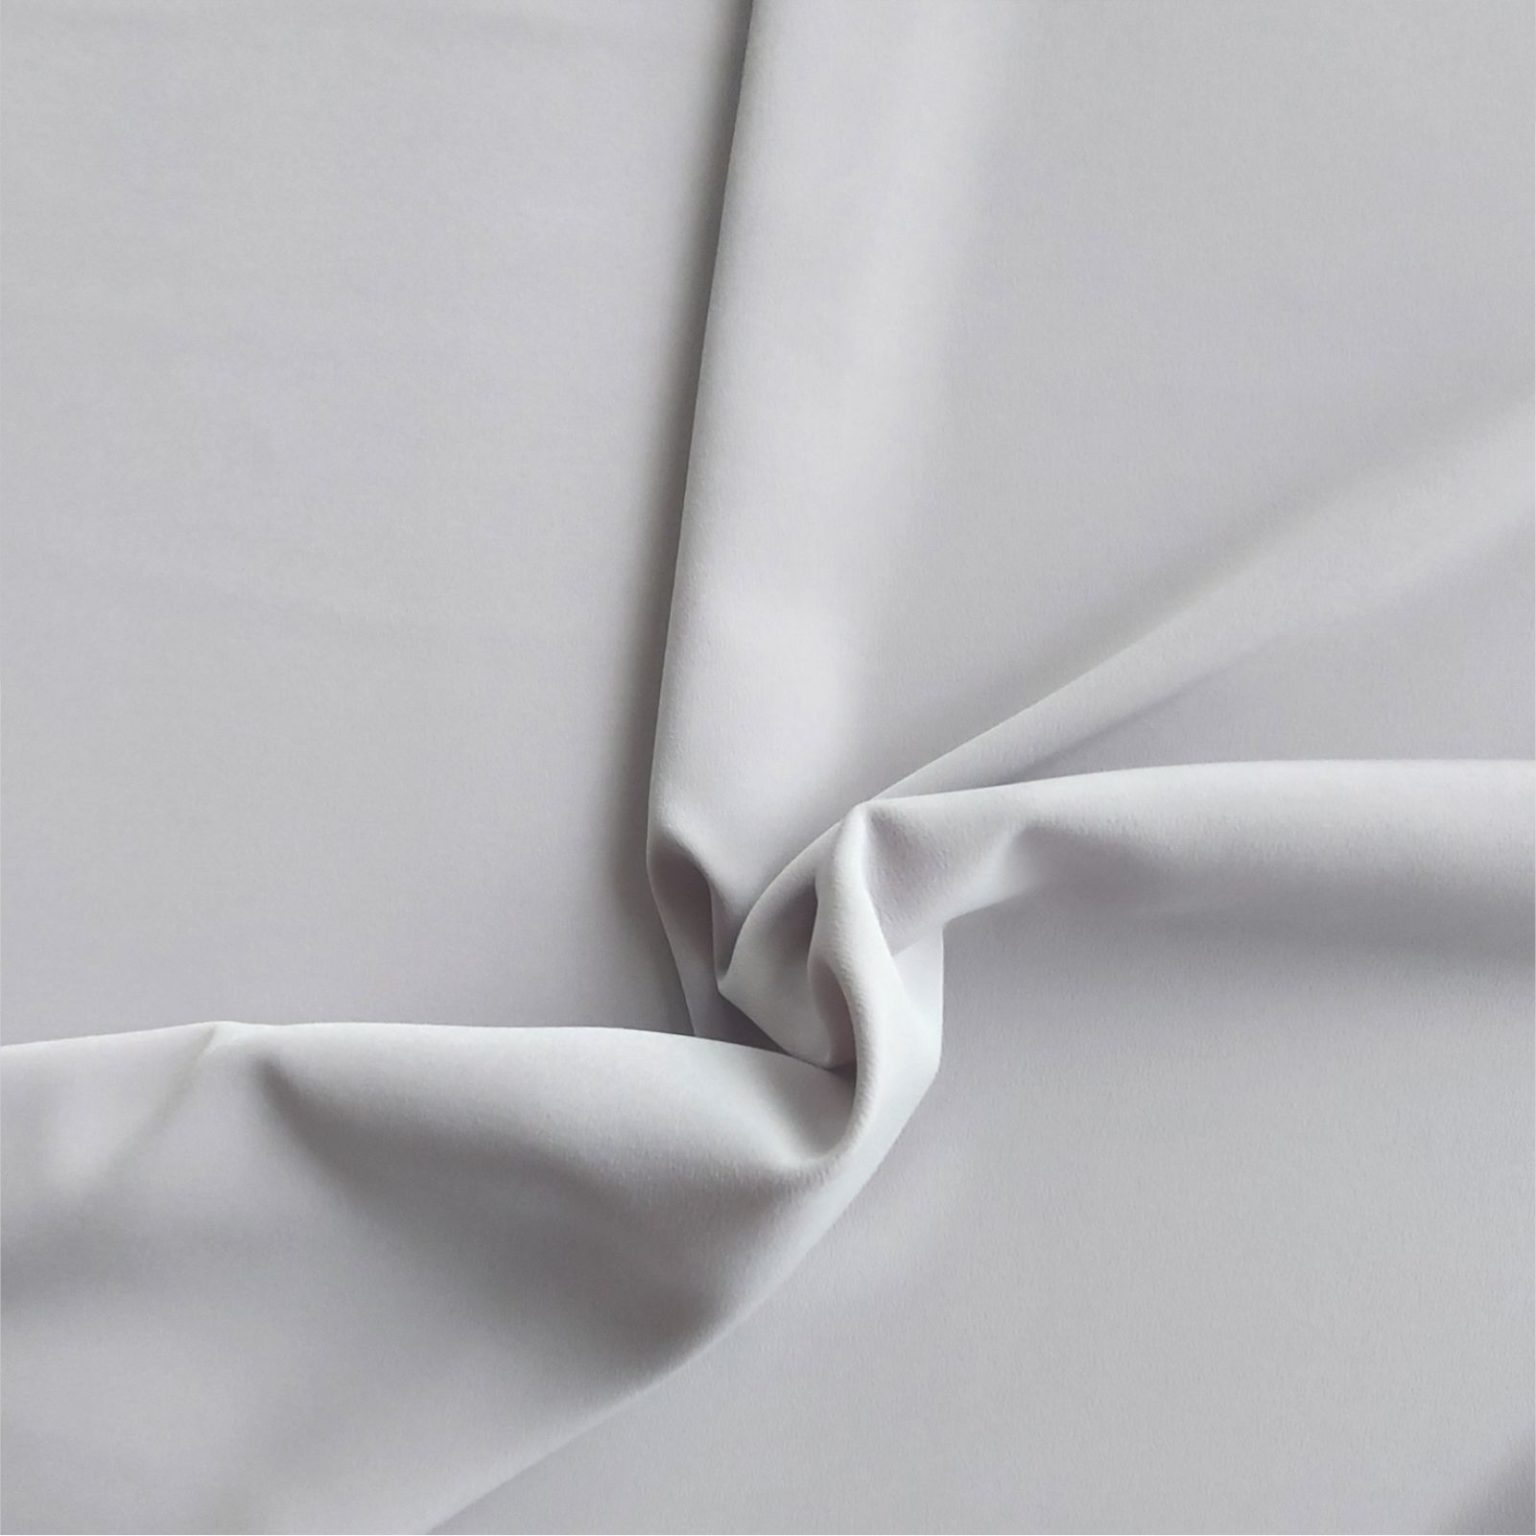 Silver Satin Back Crepe Fabric at More Sewing